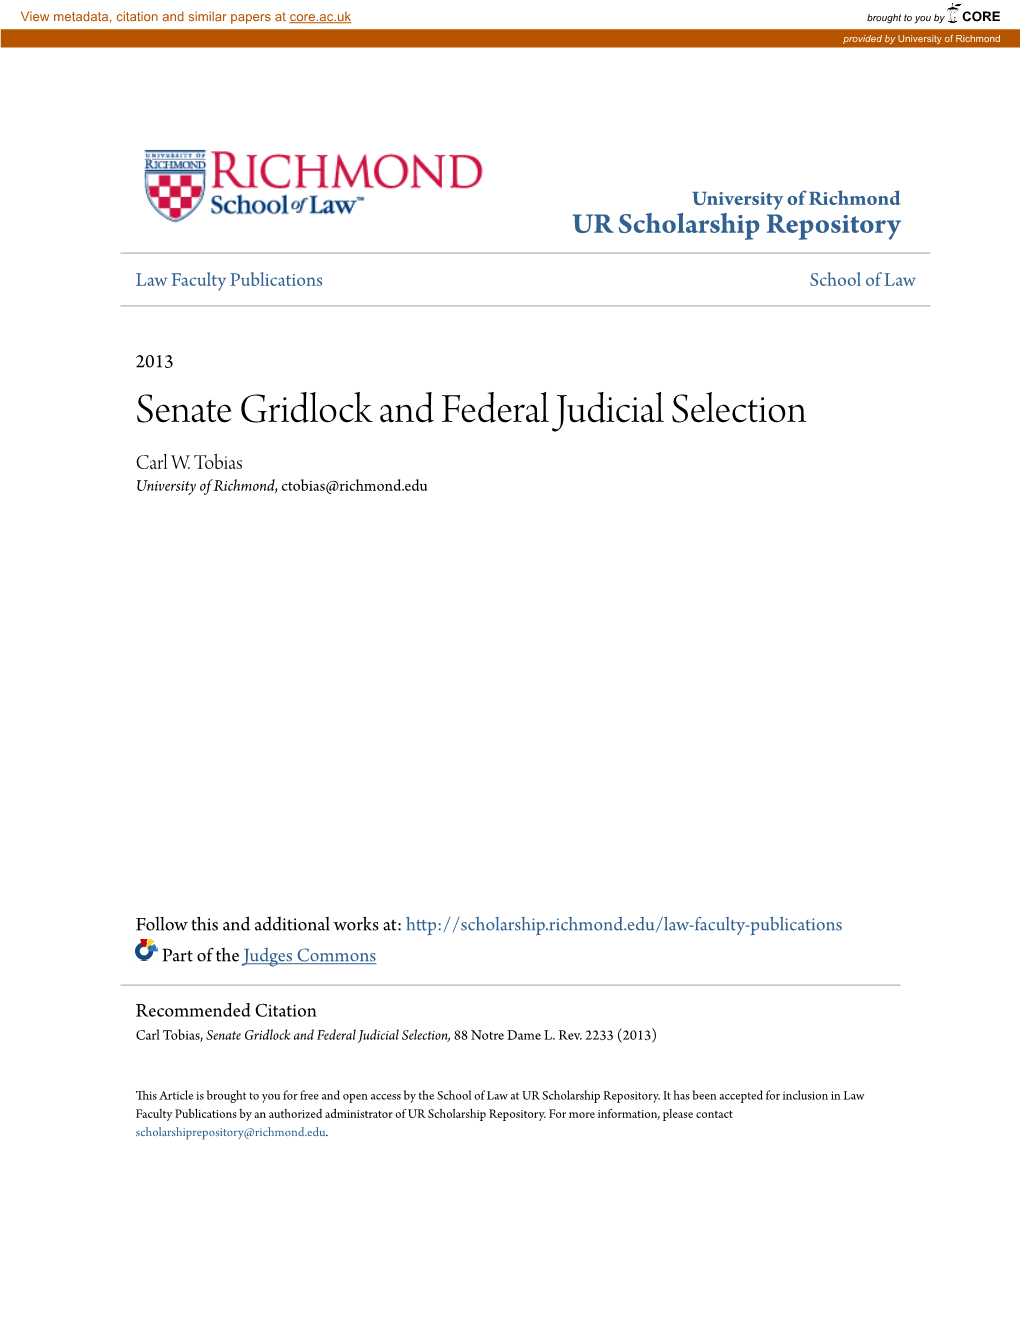 Senate Gridlock and Federal Judicial Selection Carl W